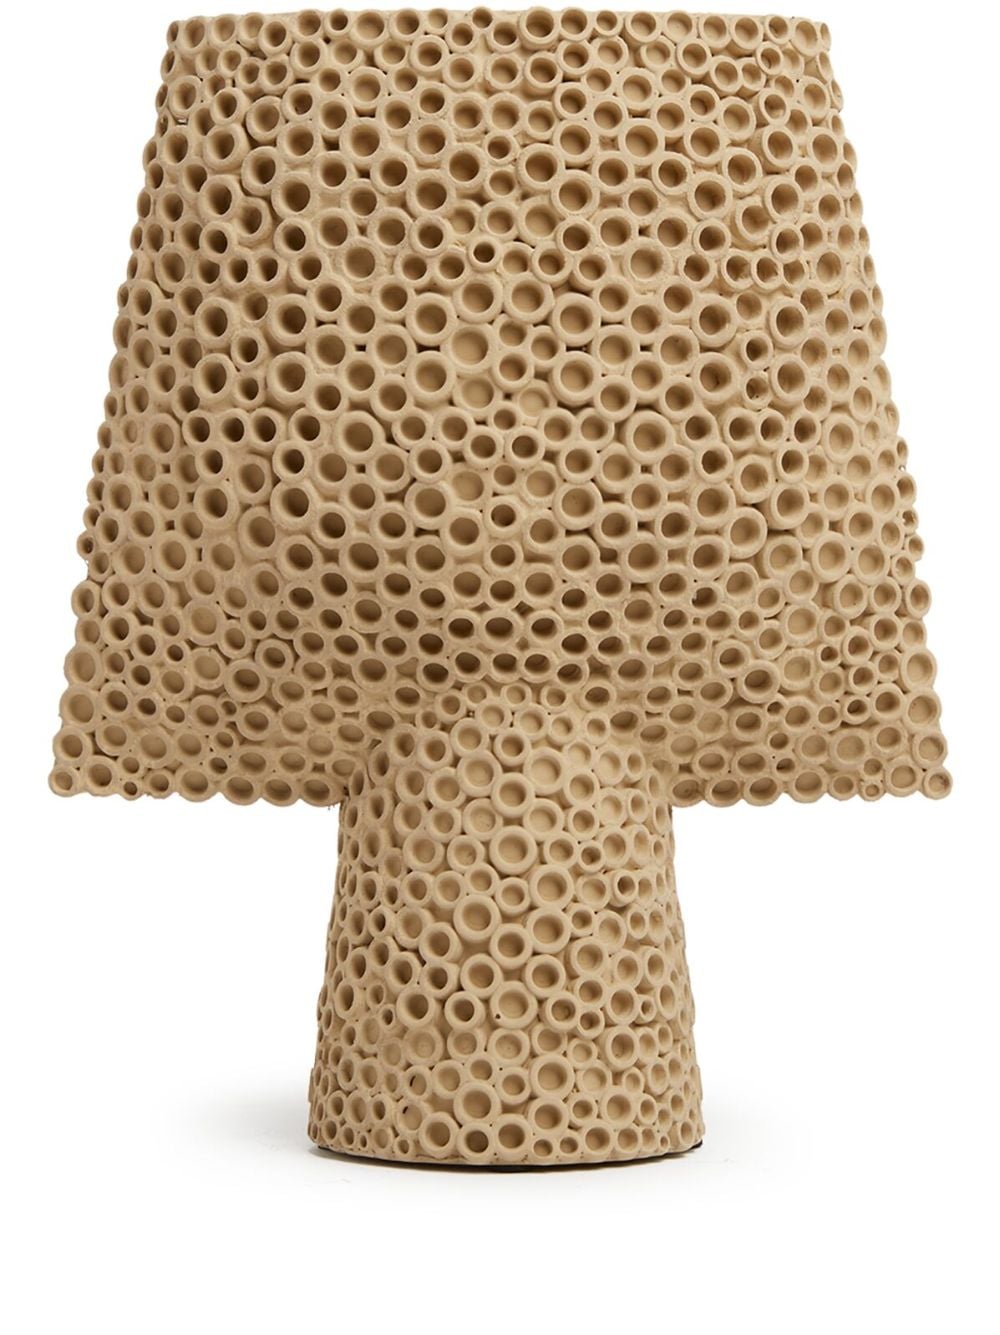 Image 1 of 101 Copenhagen mini Sphere Shisen square vase